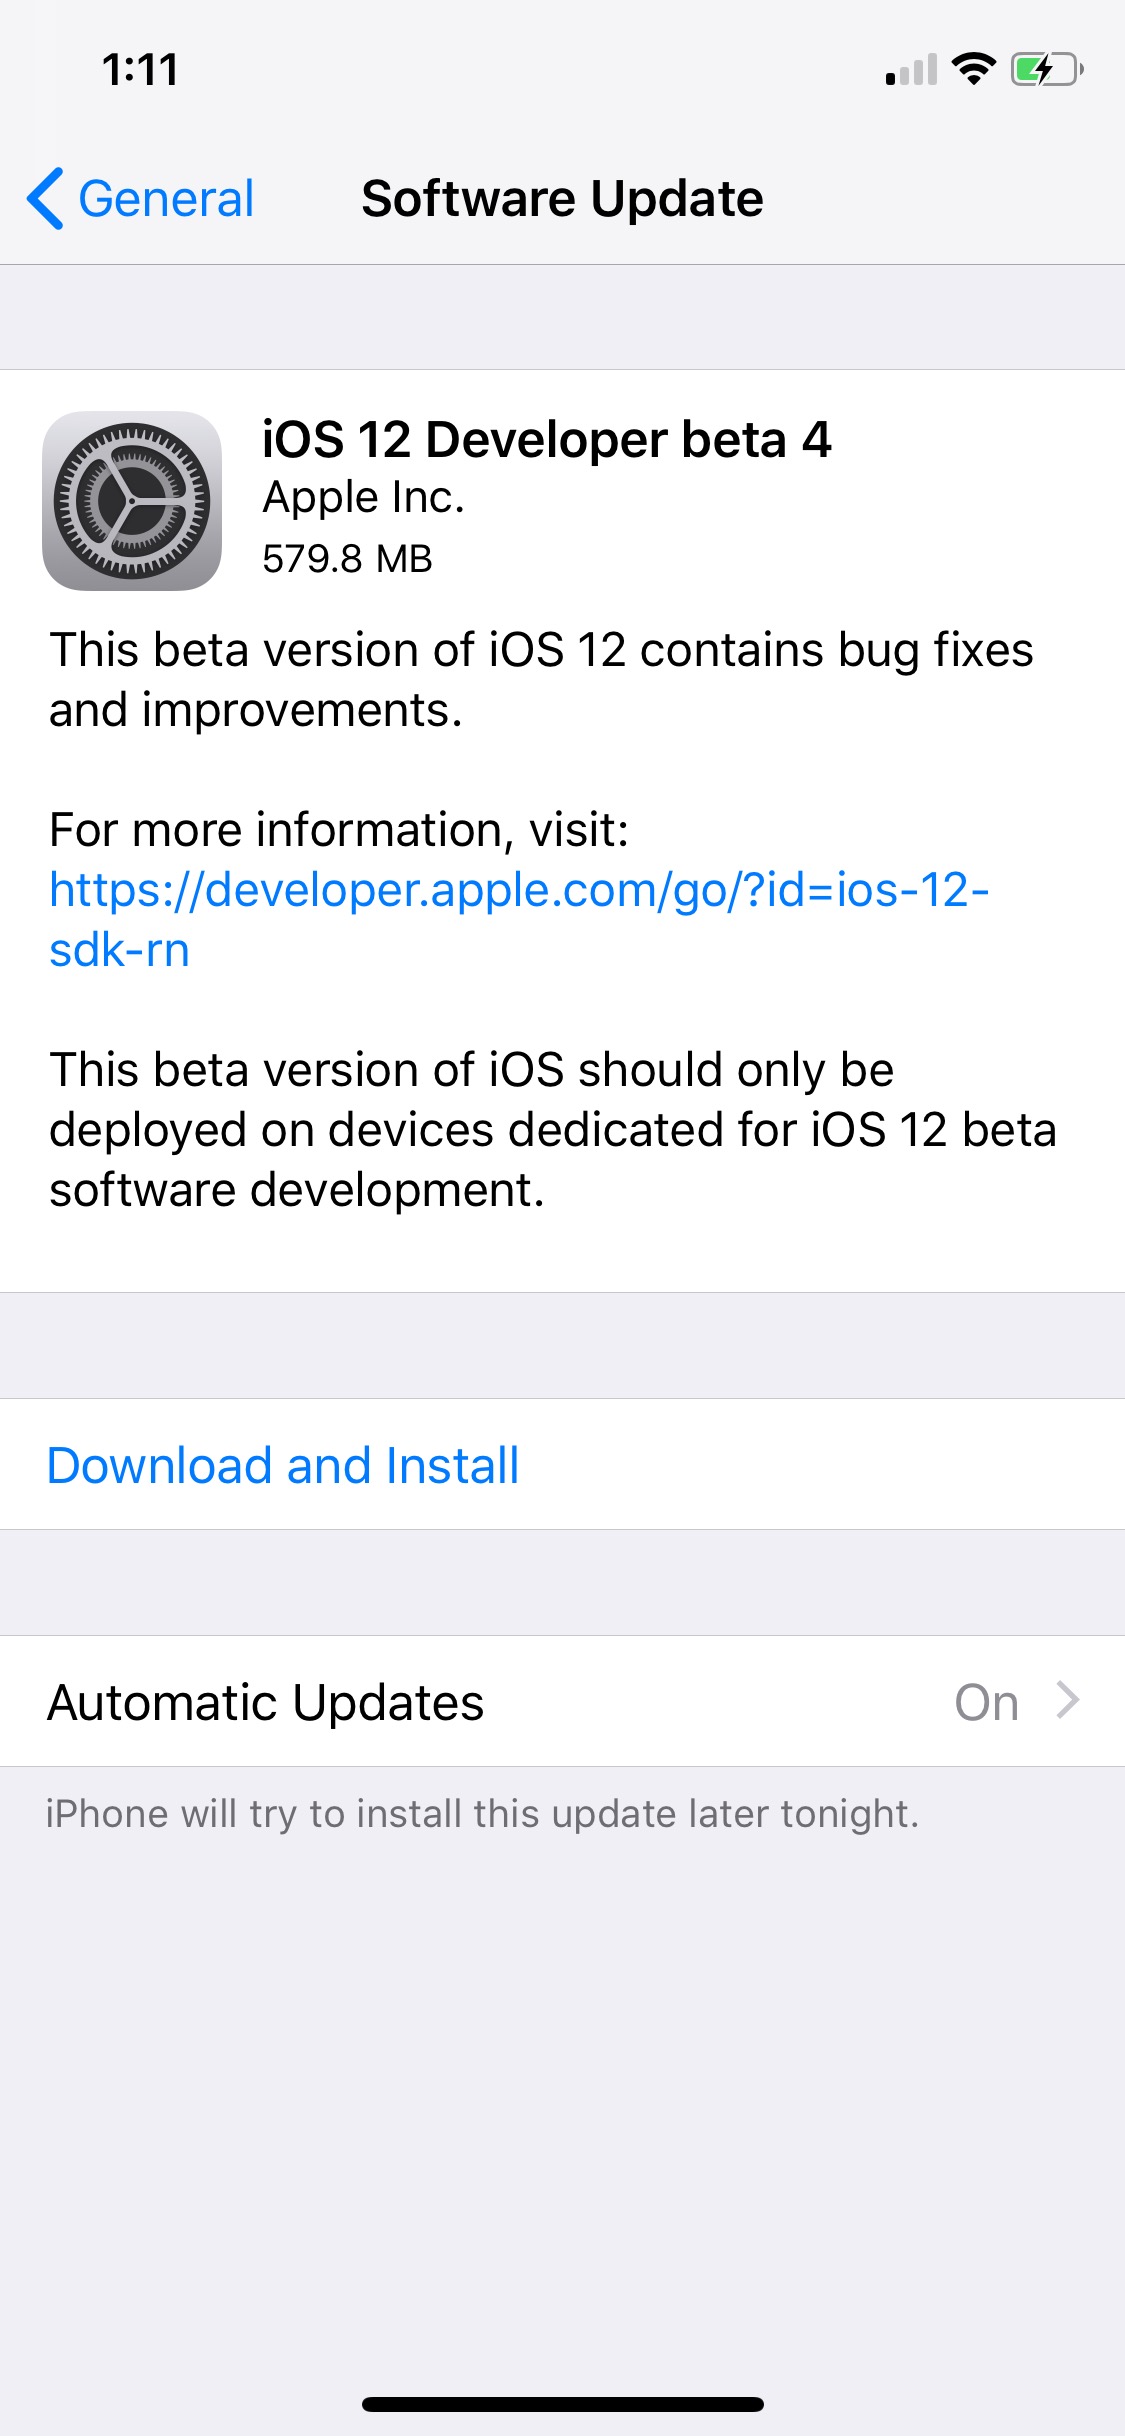 Apple Releases iOS 12 Beta 4 [Download]